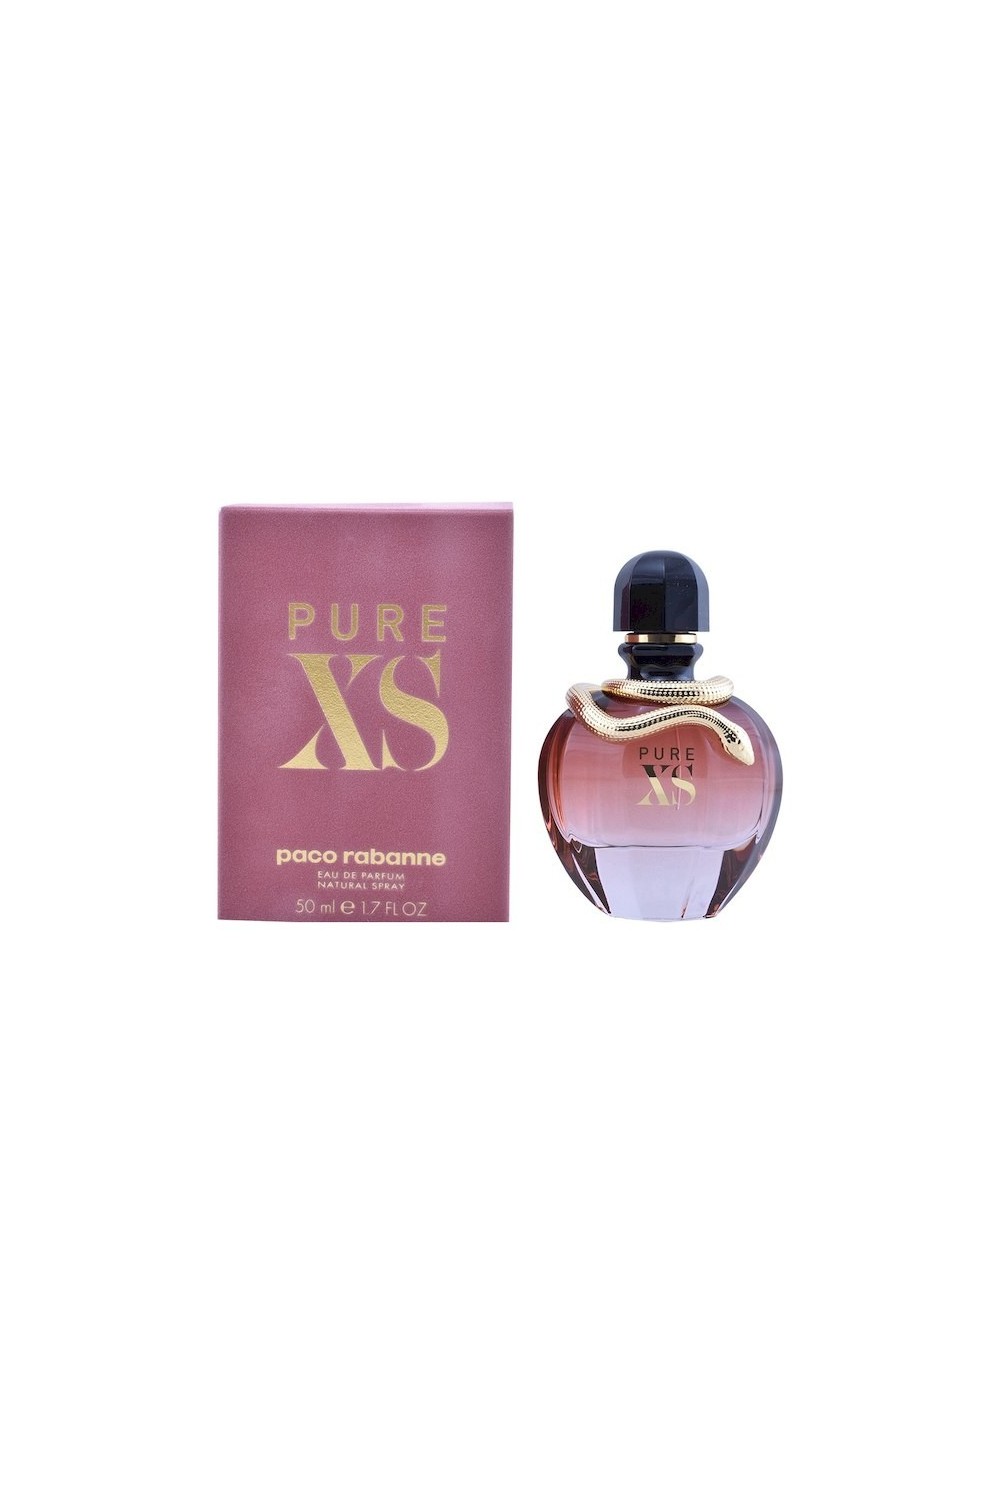 Paco Rabanne Pure XS For Her Eau De Perfume Spray 50ml